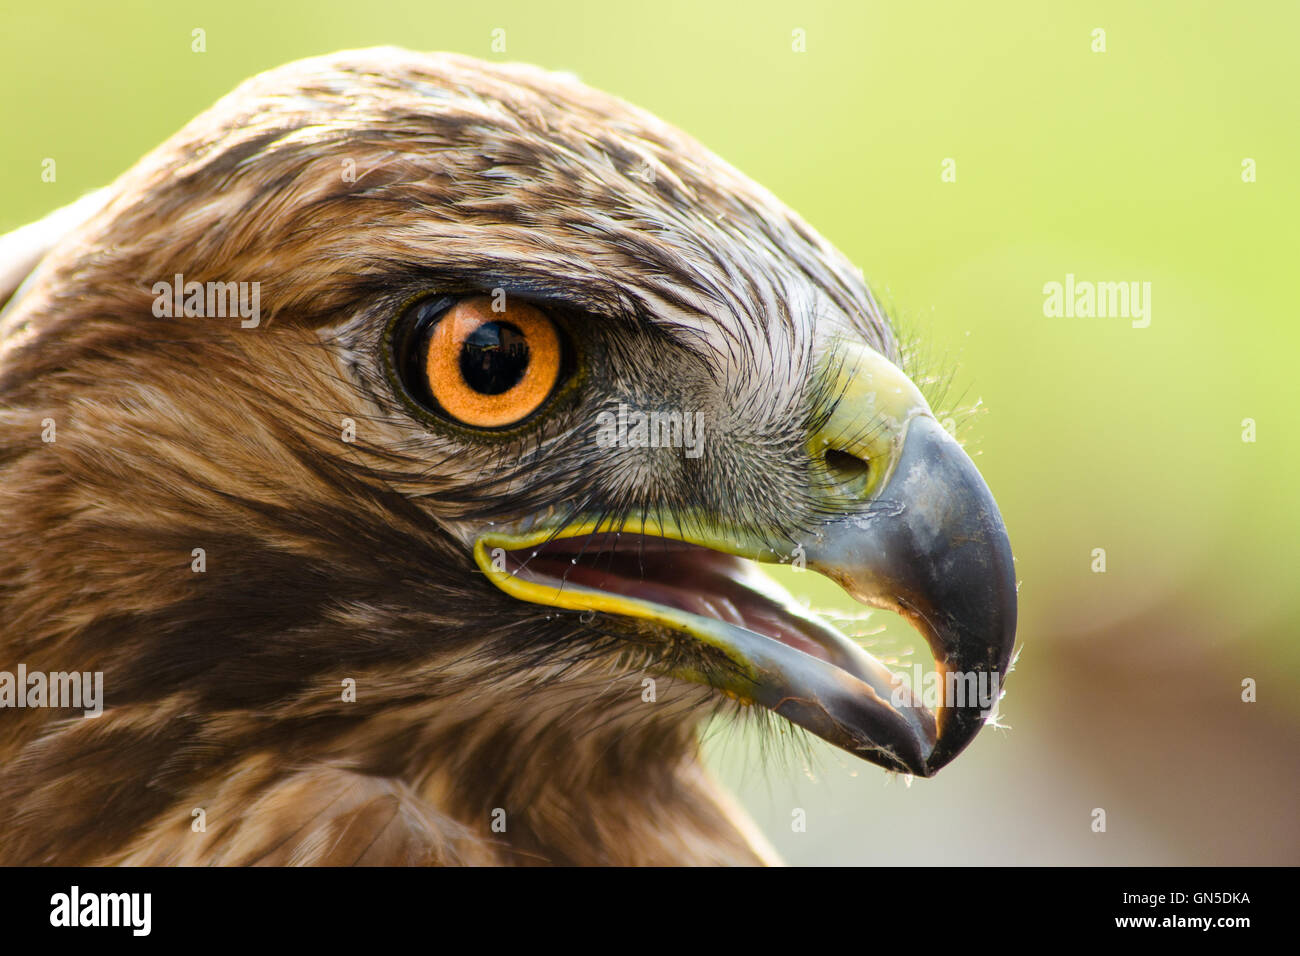 A close-up of eagle with orange big eyes Stock Photo